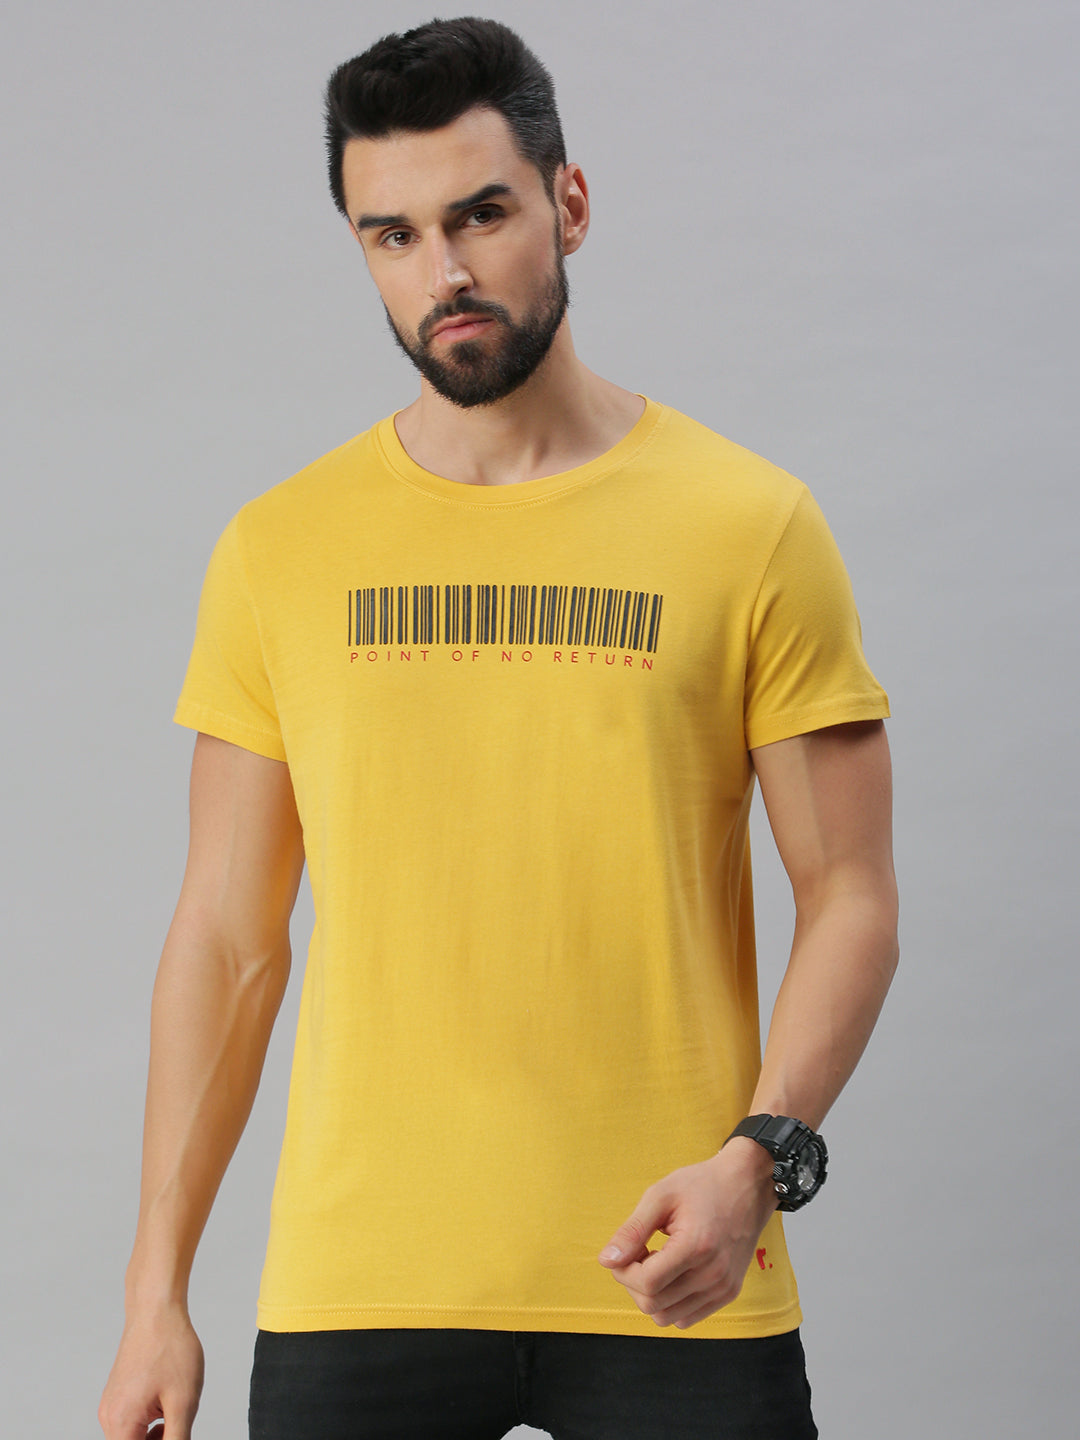 Barcode printed yellow t-shirt